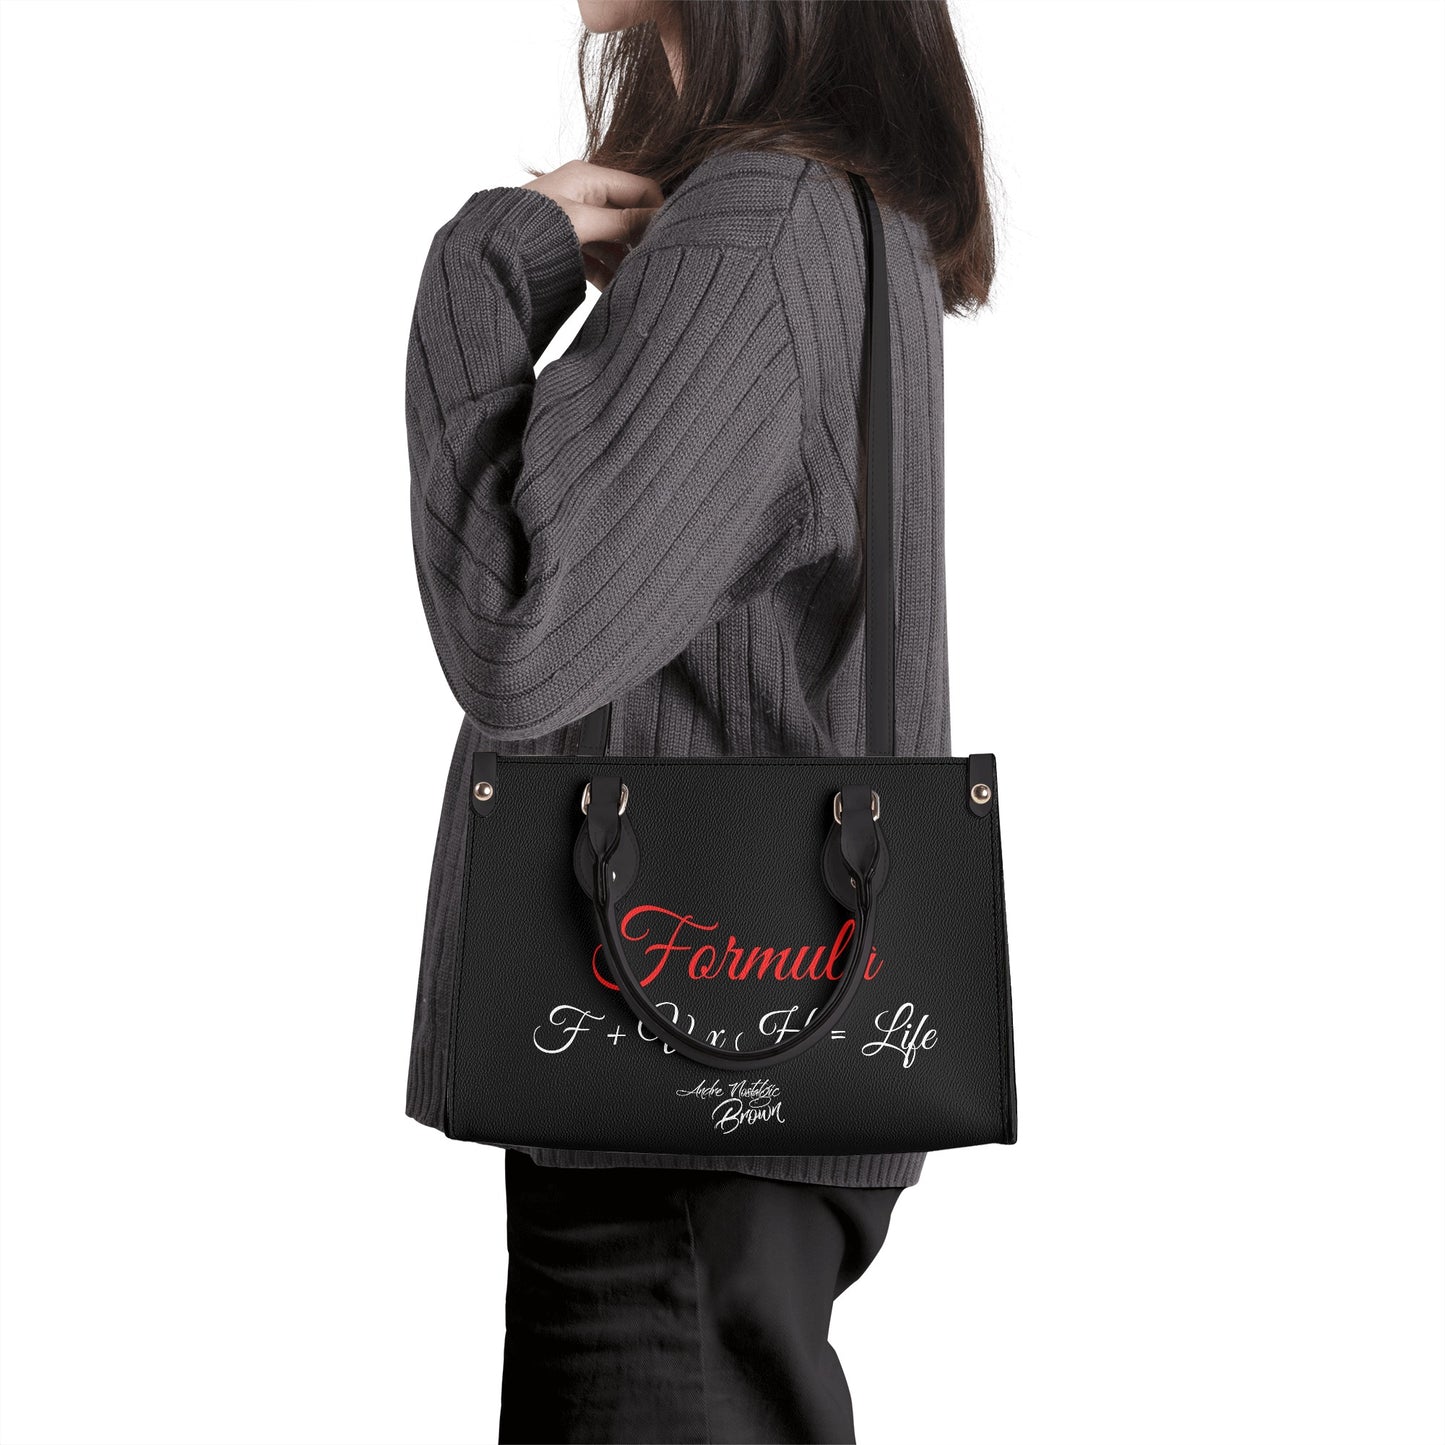 Formula F+ V x H = Life Luxury Women PU Handbag With Shoulder Strap